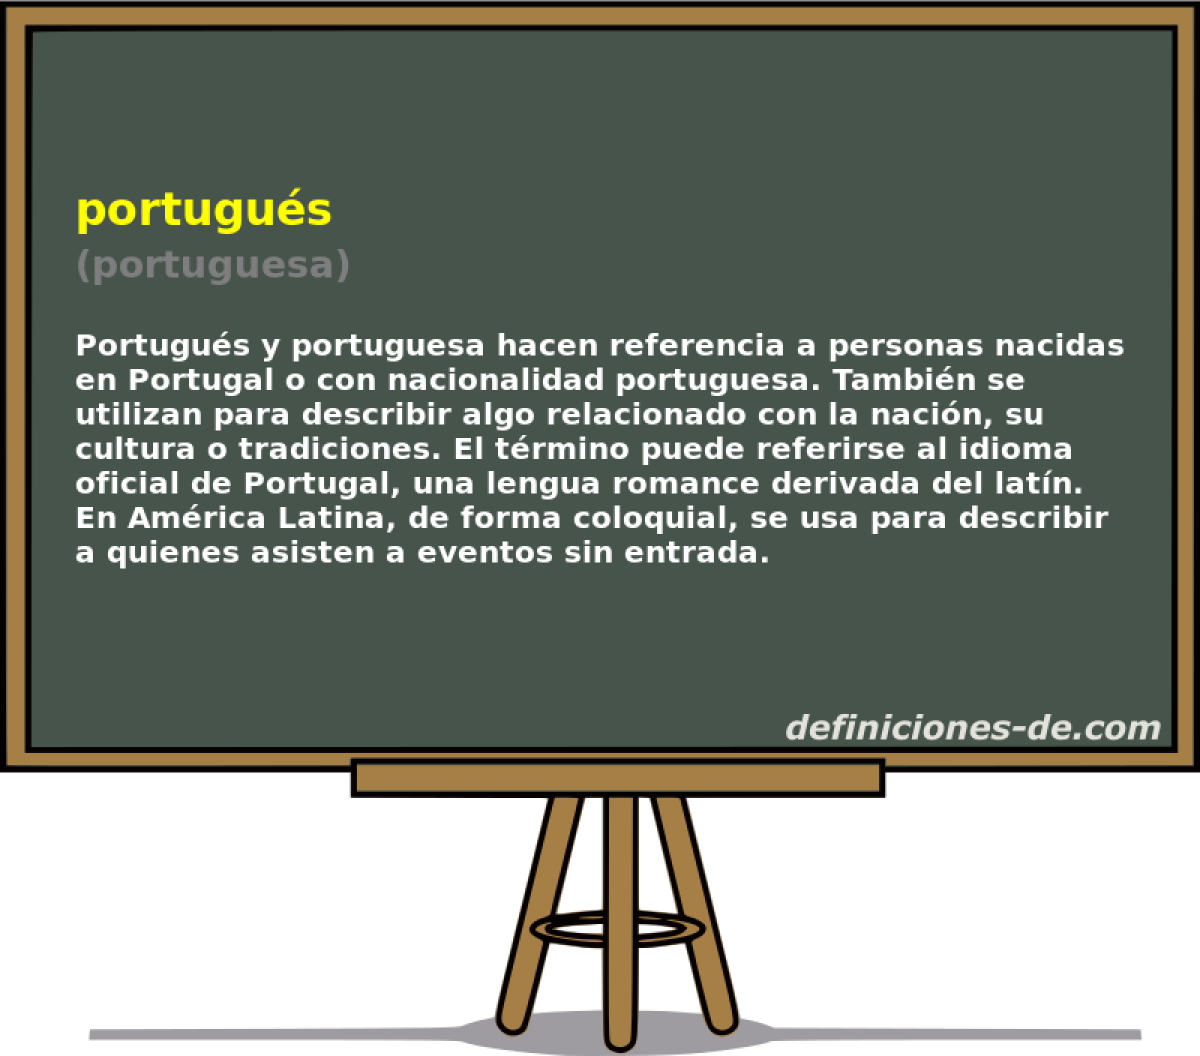 portugus (portuguesa)